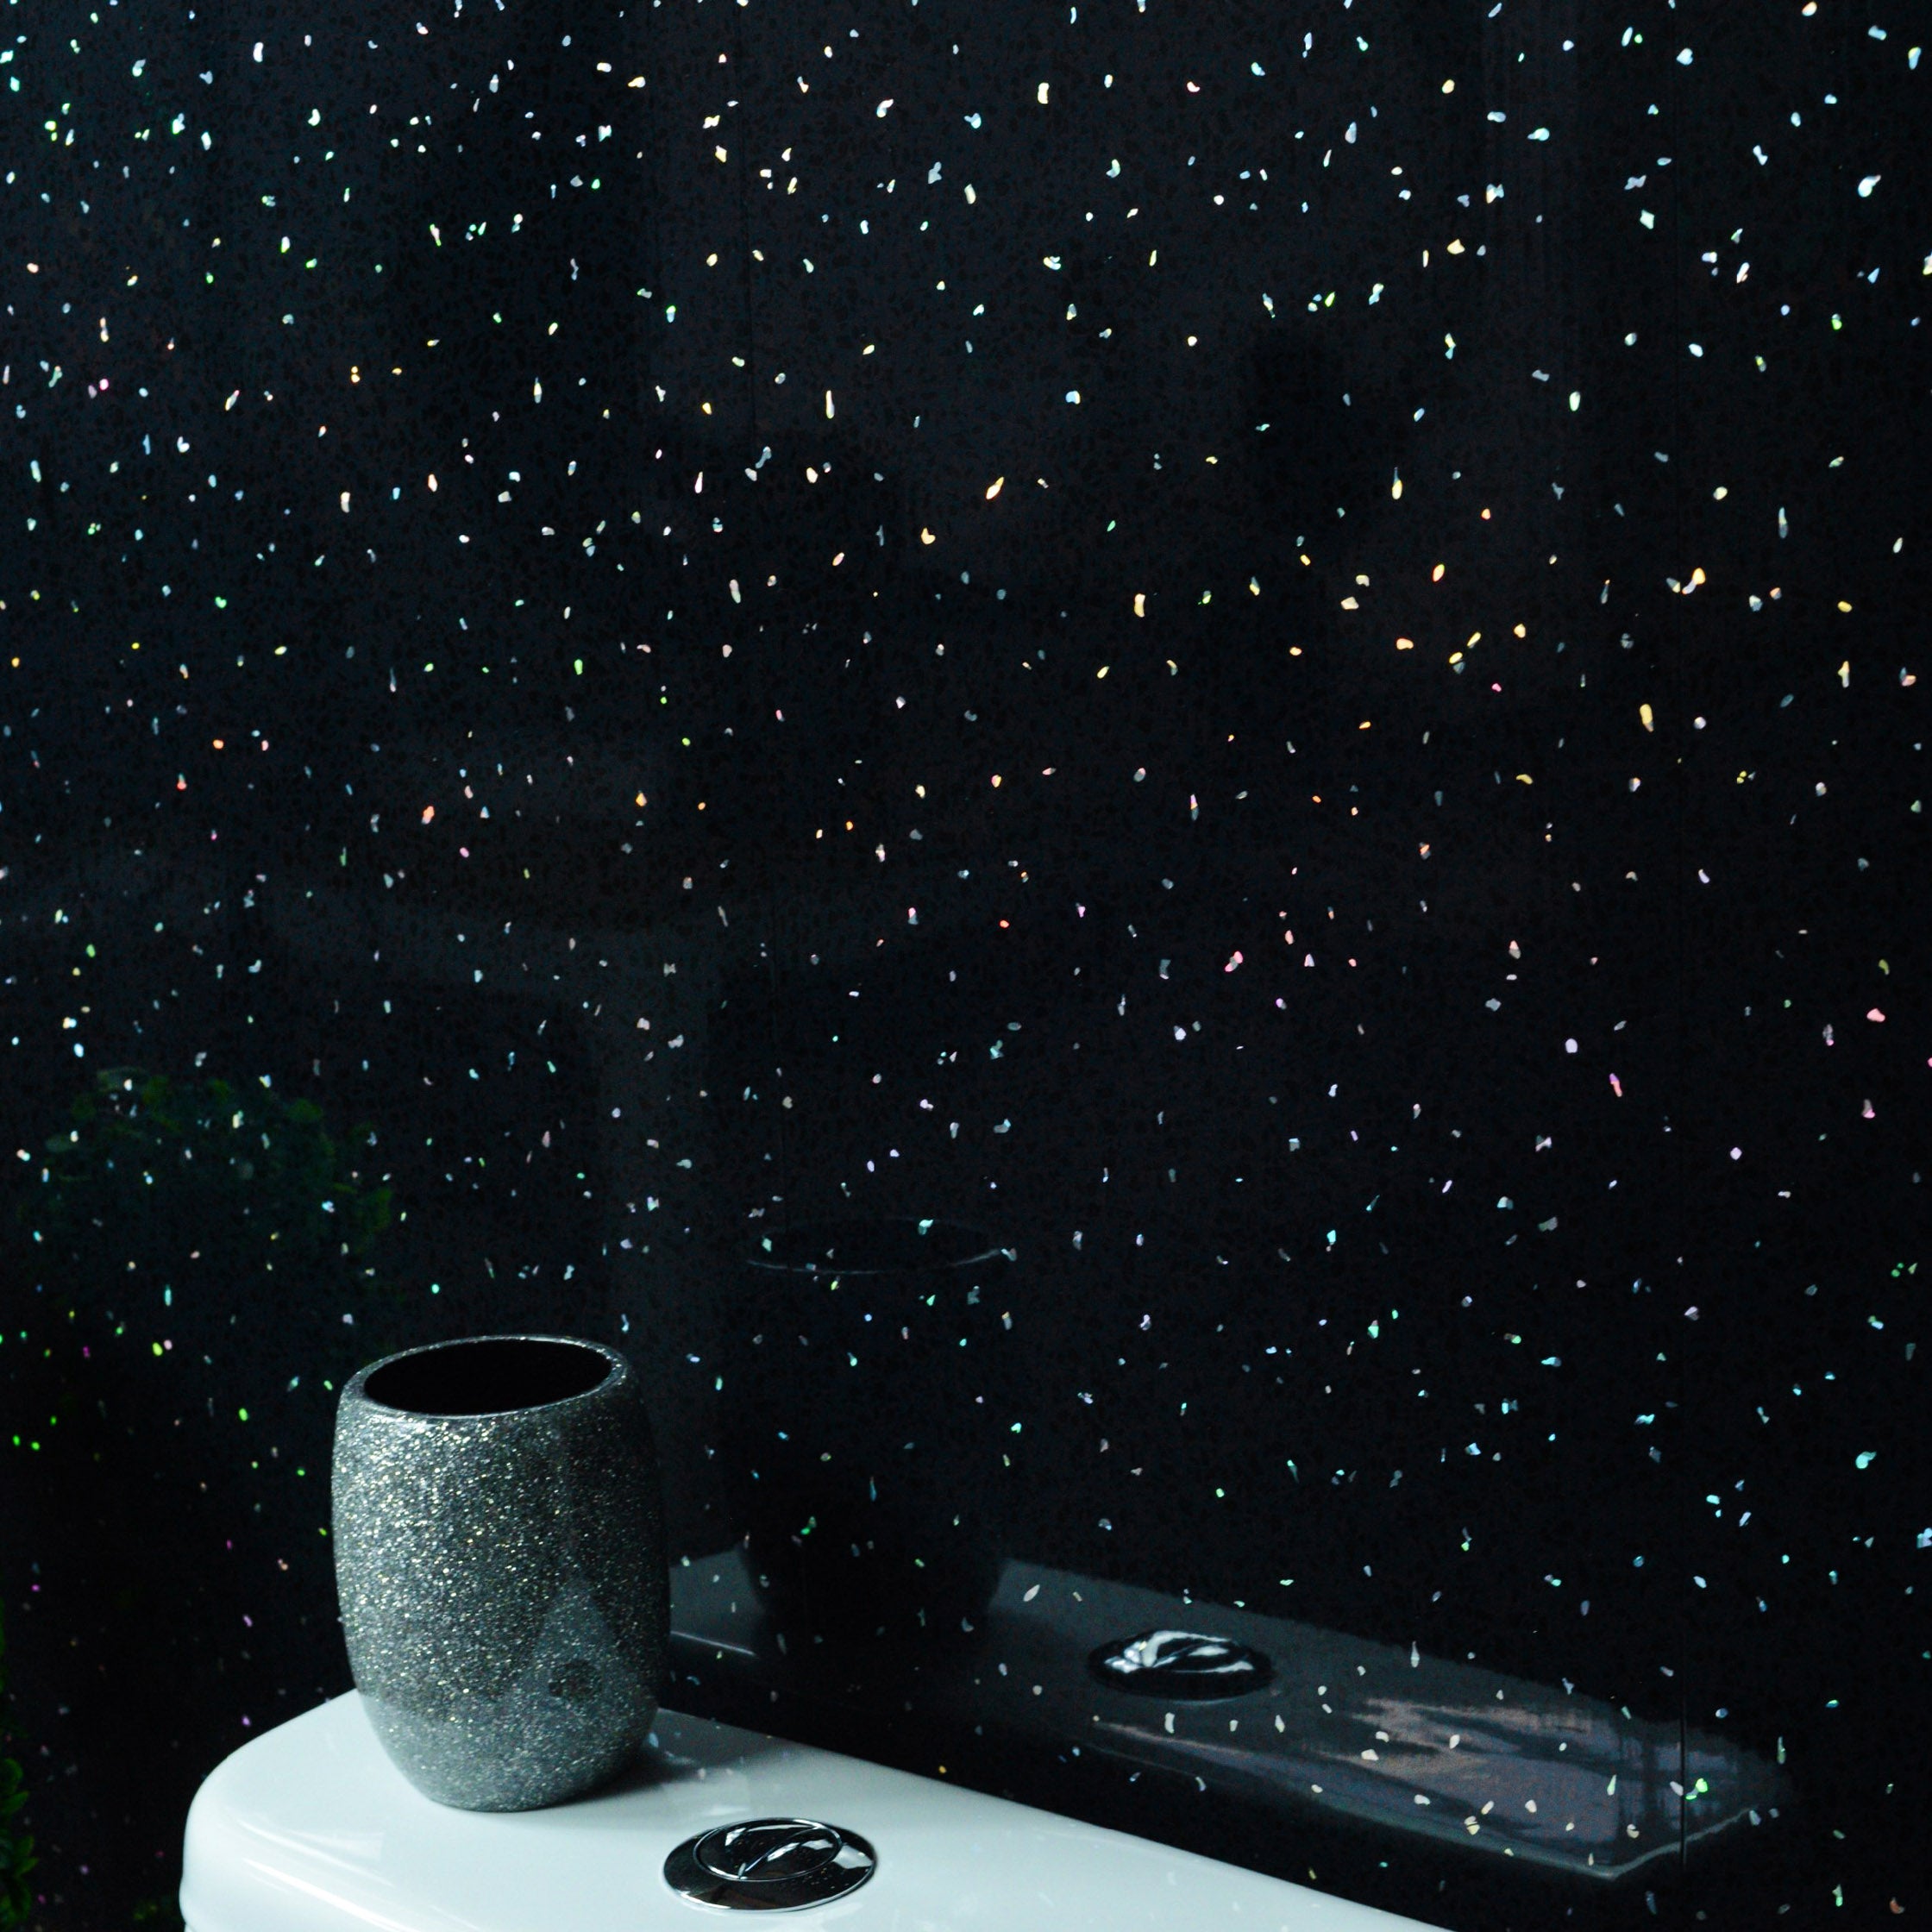 Black Sparkle 10mm Bathroom Cladding PVC Shower Panels